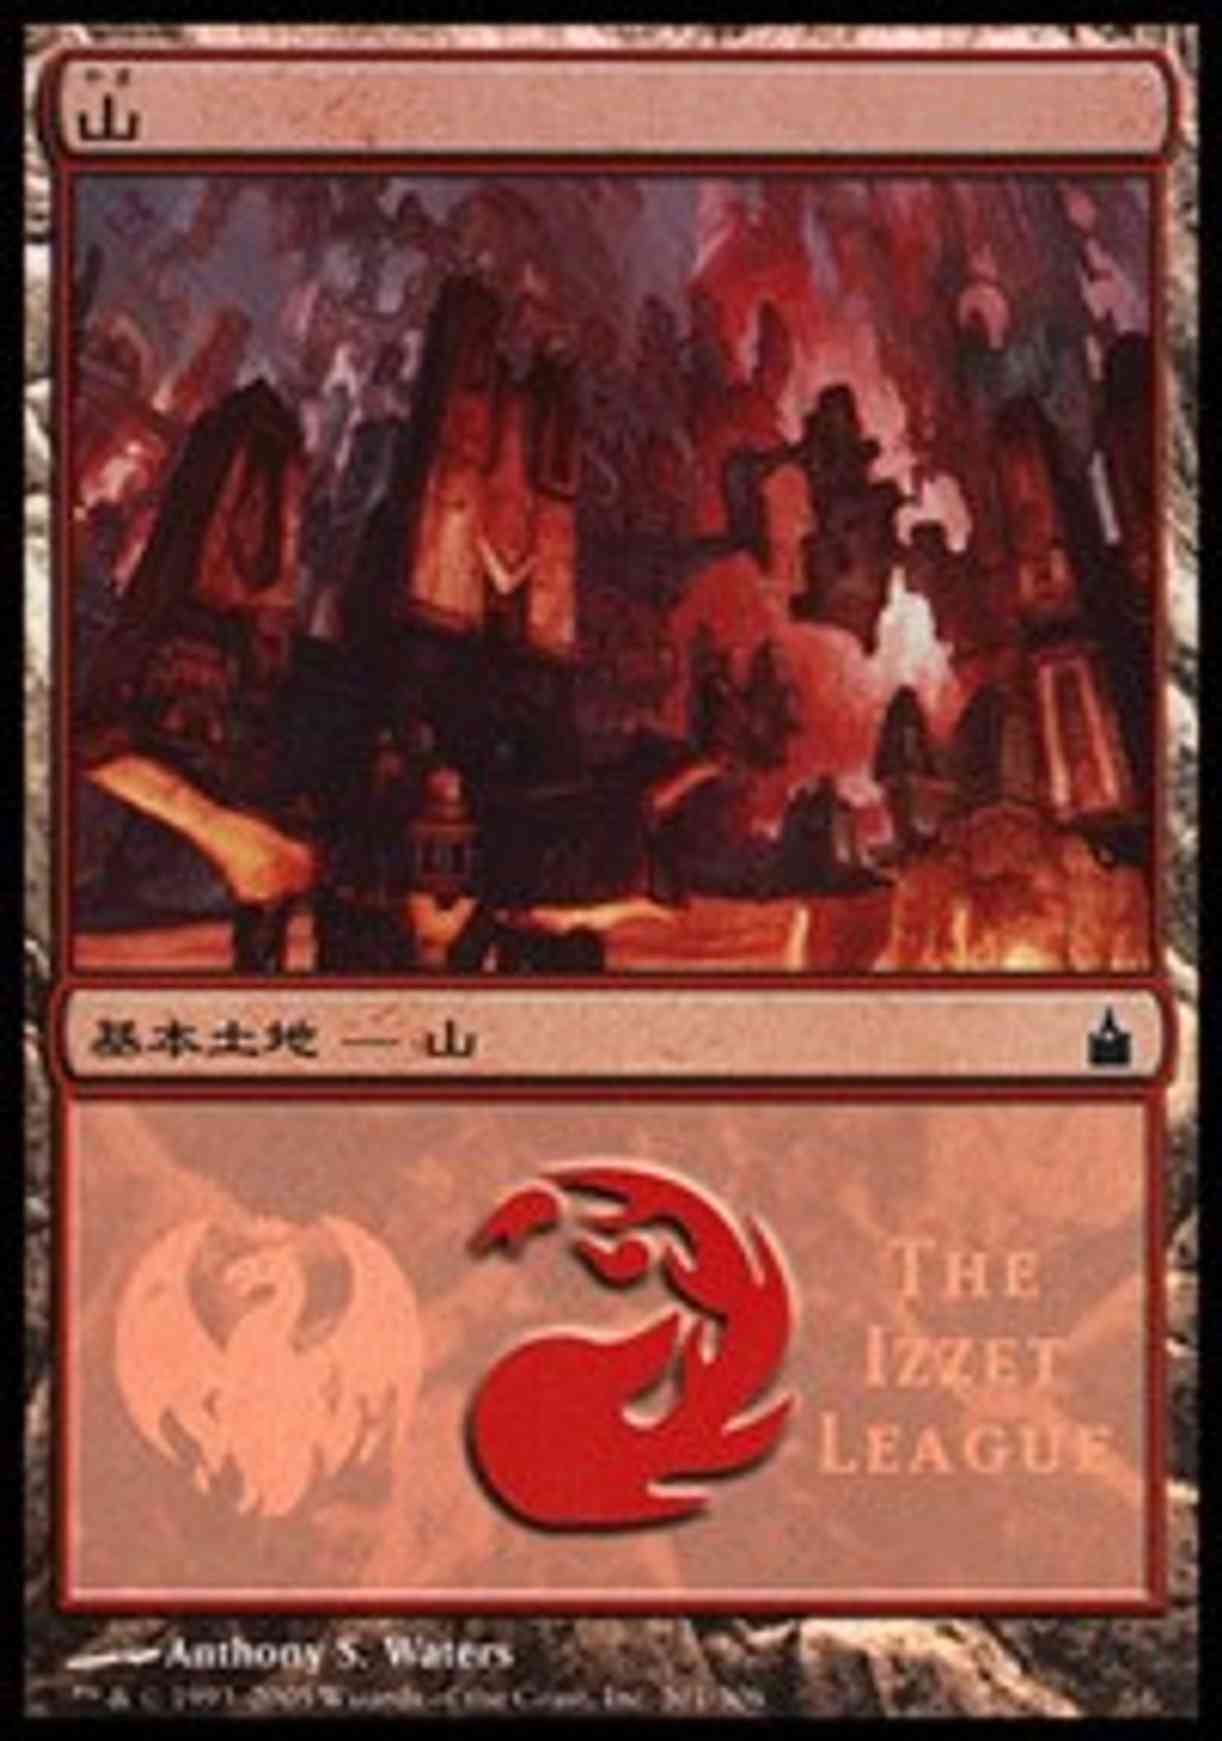 Mountain - Izzet League magic card front